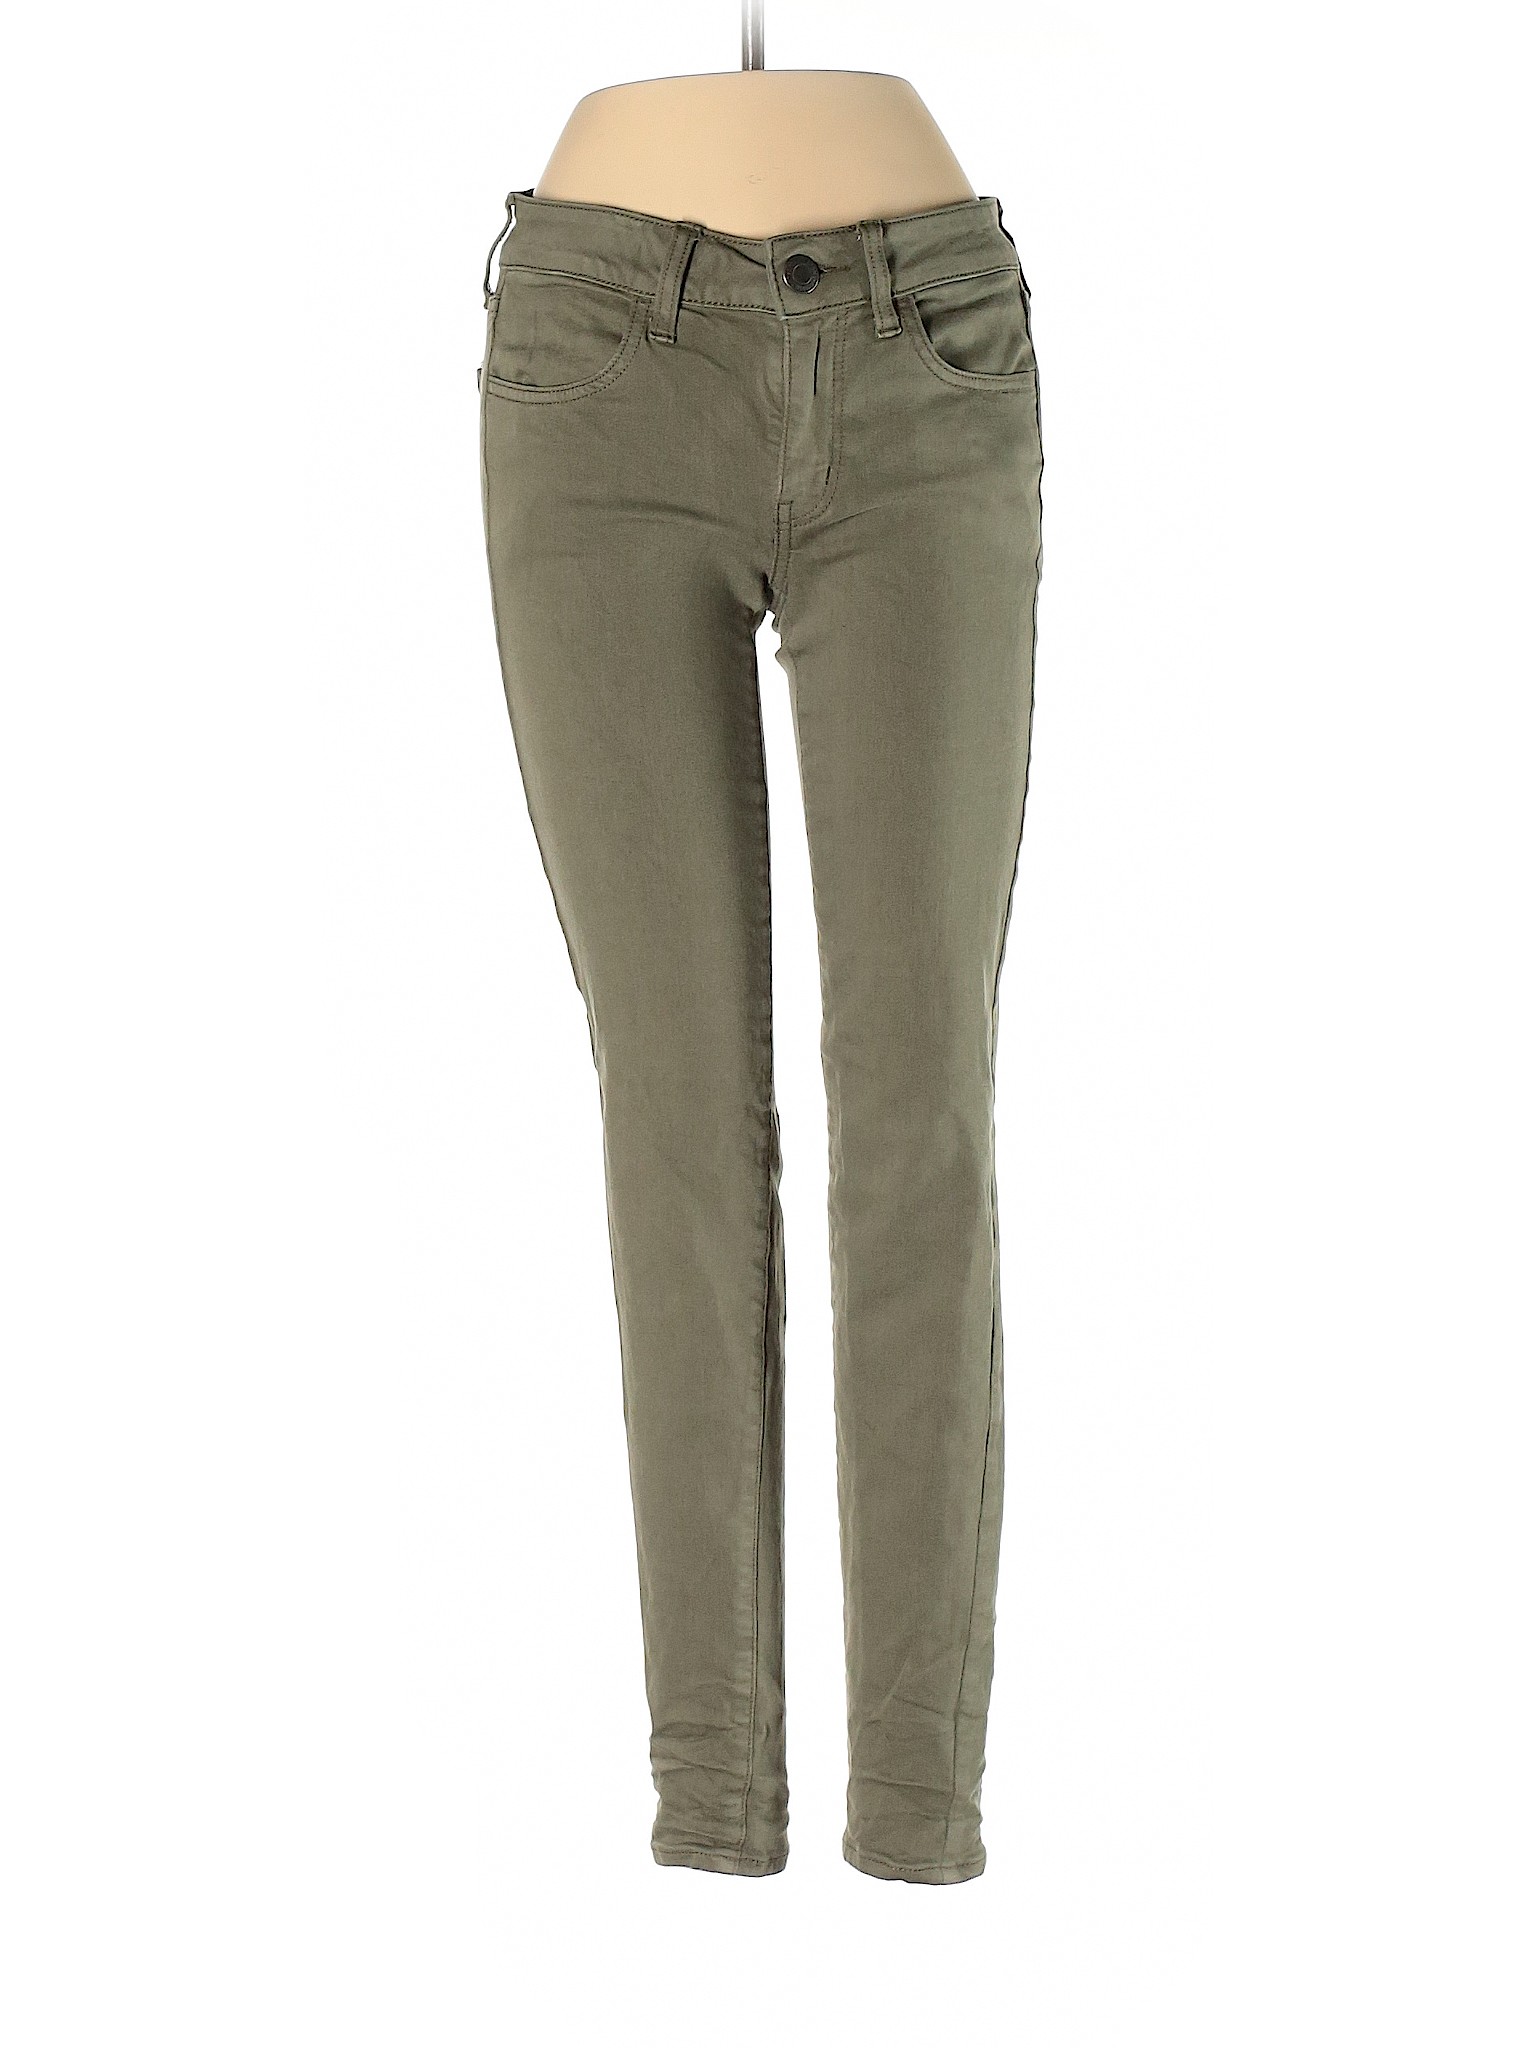 American Eagle Outfitters Women Green Jeans 2 | eBay